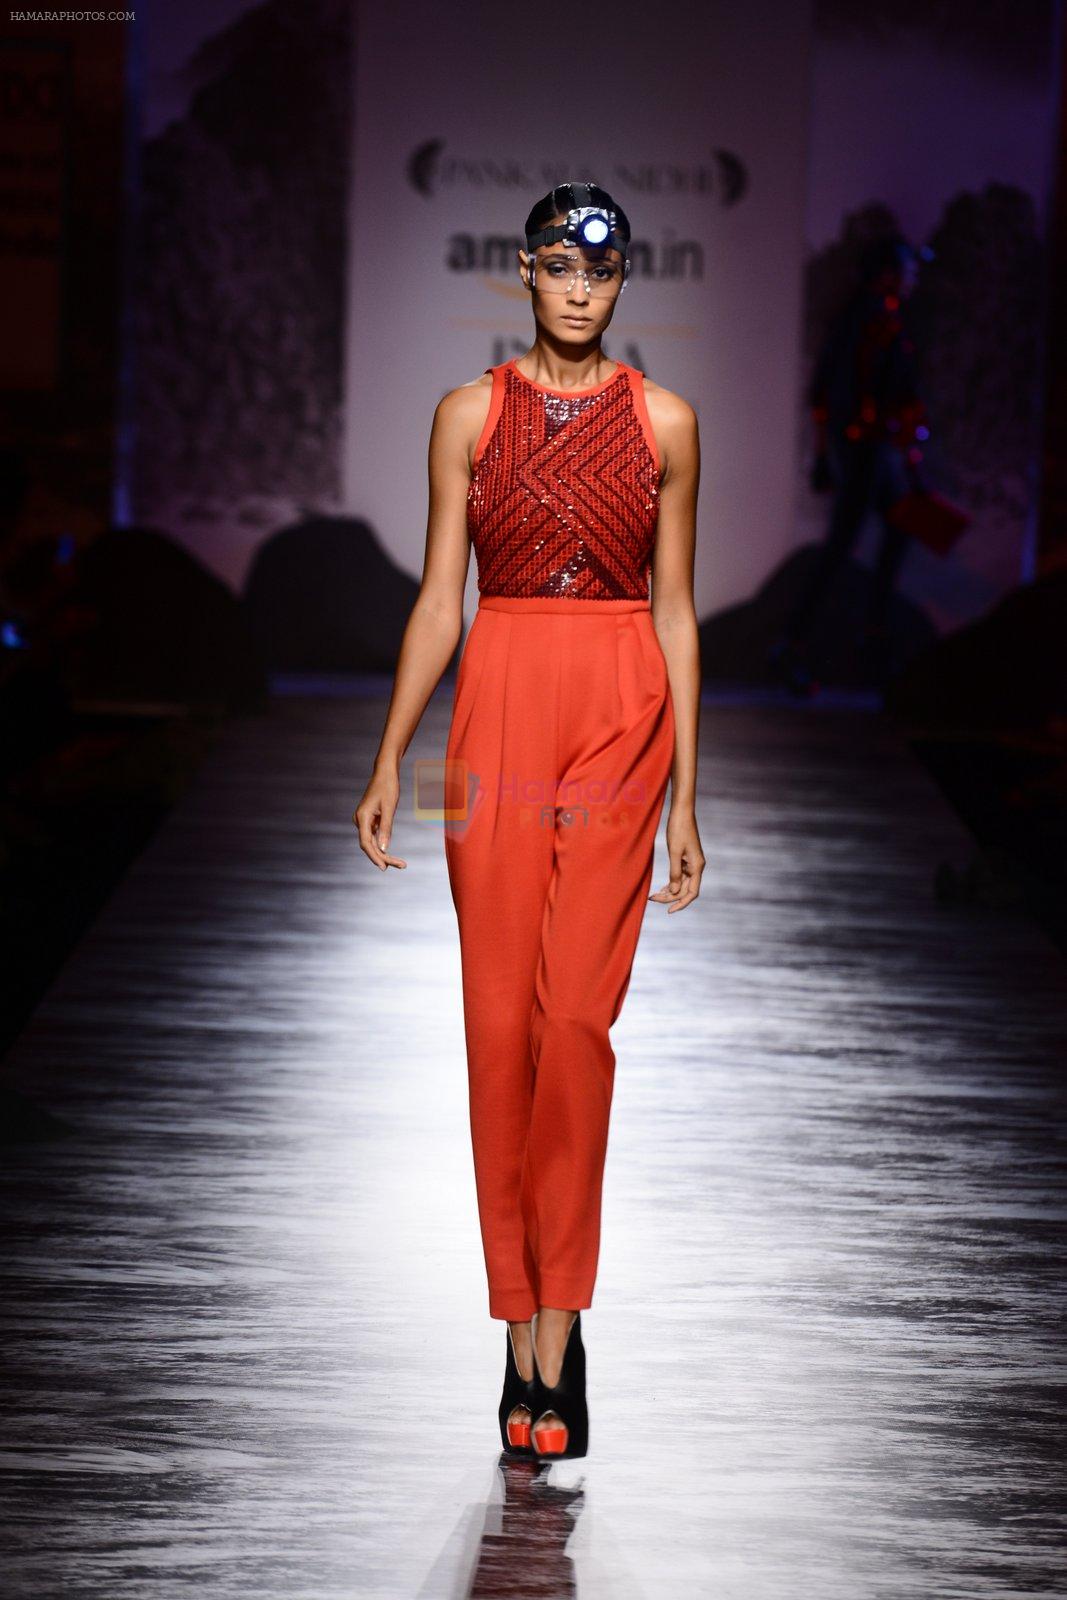 Model walk the ramp for Pankaj Nidhi on day 3 of Amazon India Fashion Week on 27th March 2015